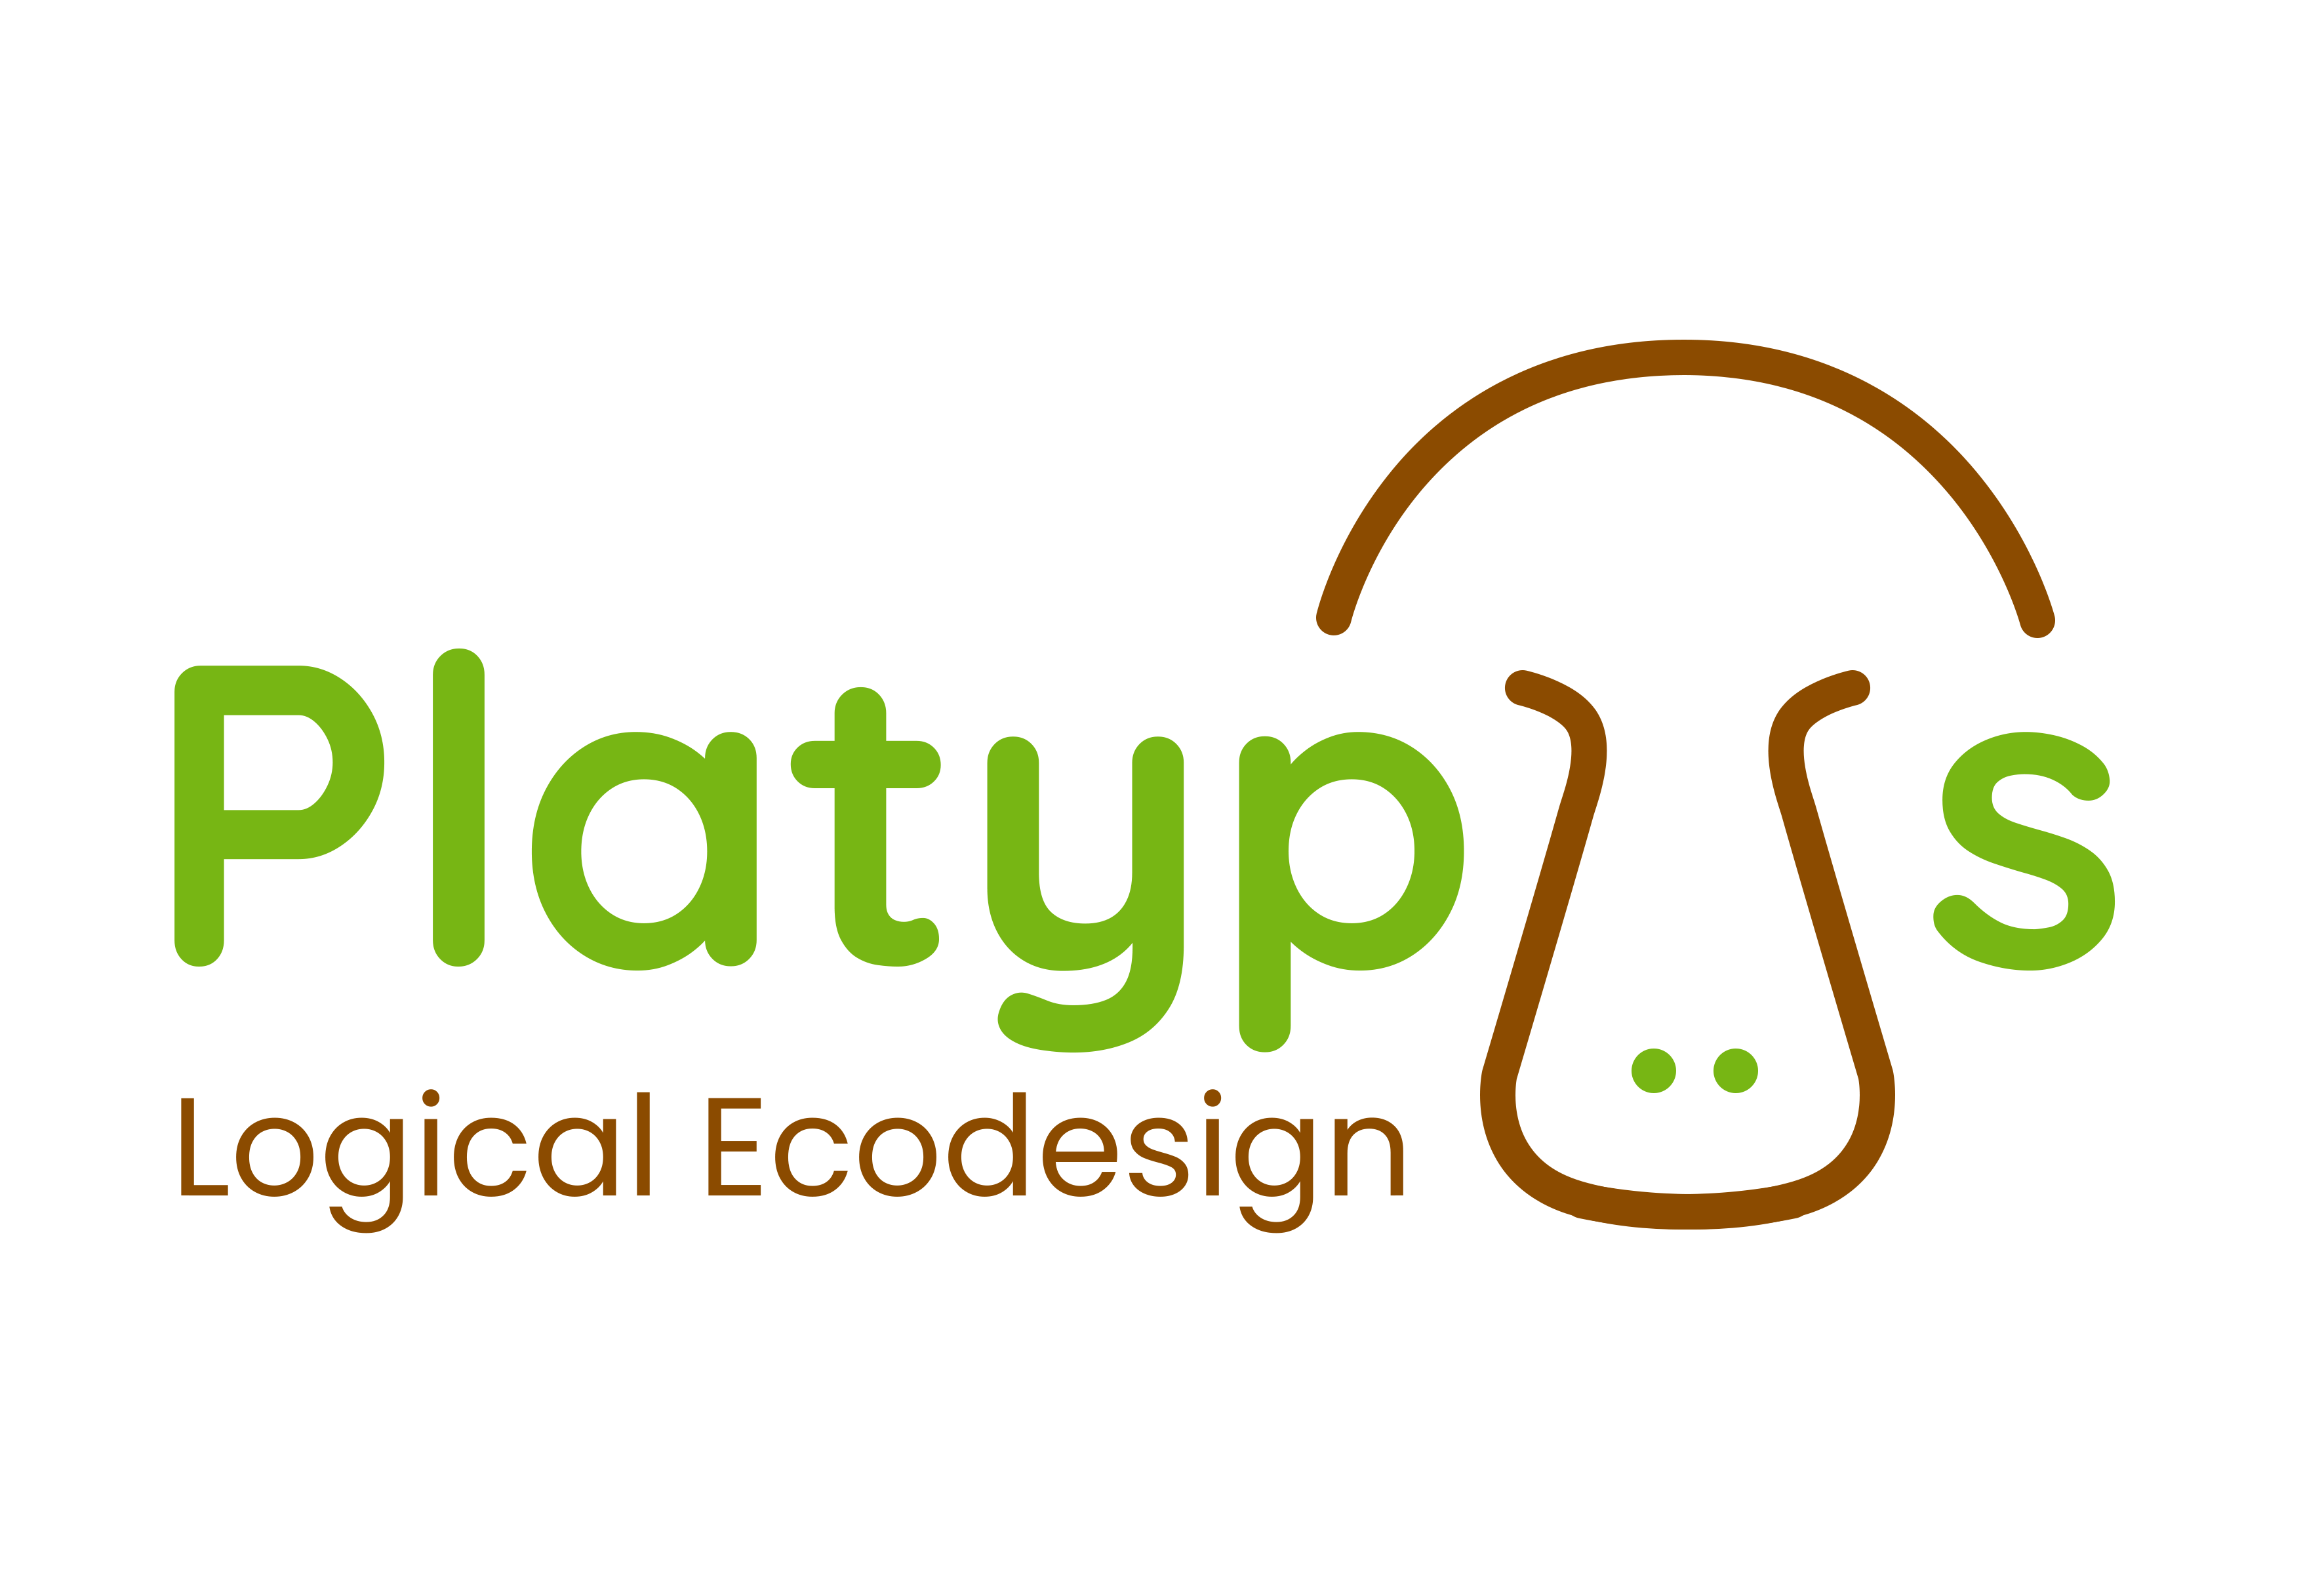 Platypus ecodesign logo